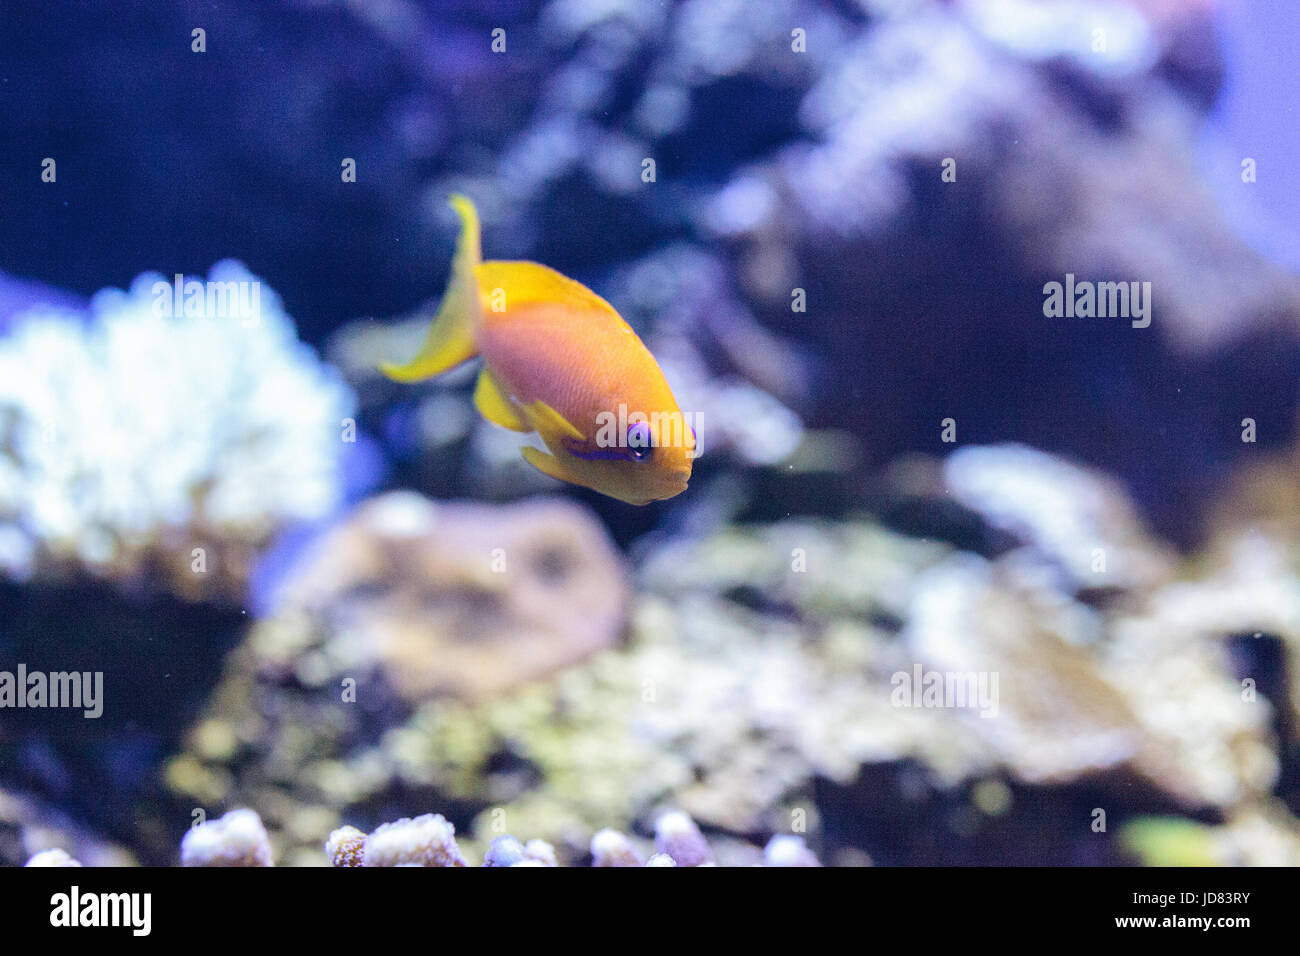 Yellow Lyretail Anthias fish known as Pseudanthias squamipinnis in a coral reef. Stock Photo